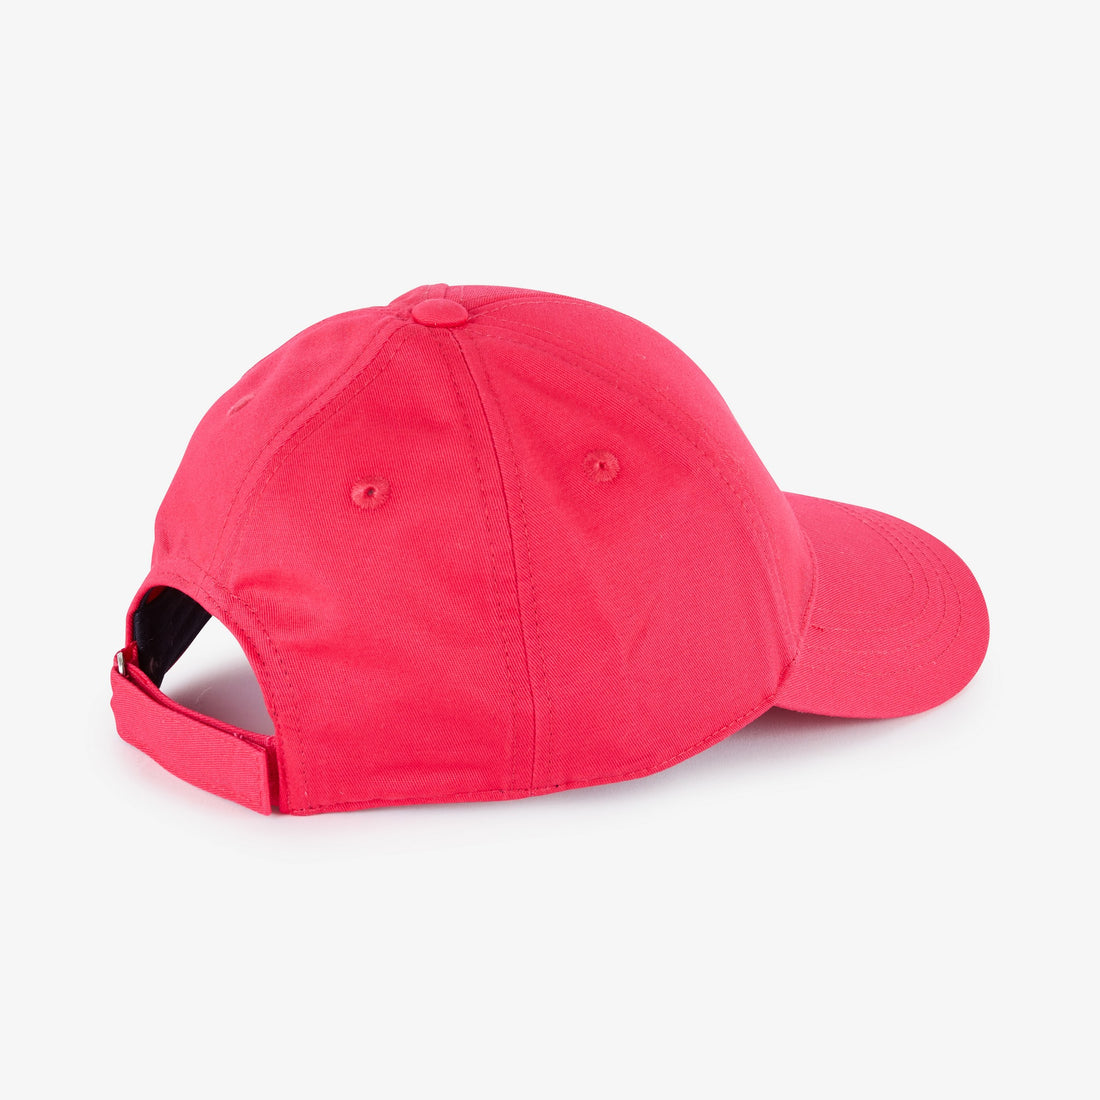 plain-pink-baseball-cap_e23chaca0001_rgm8_02